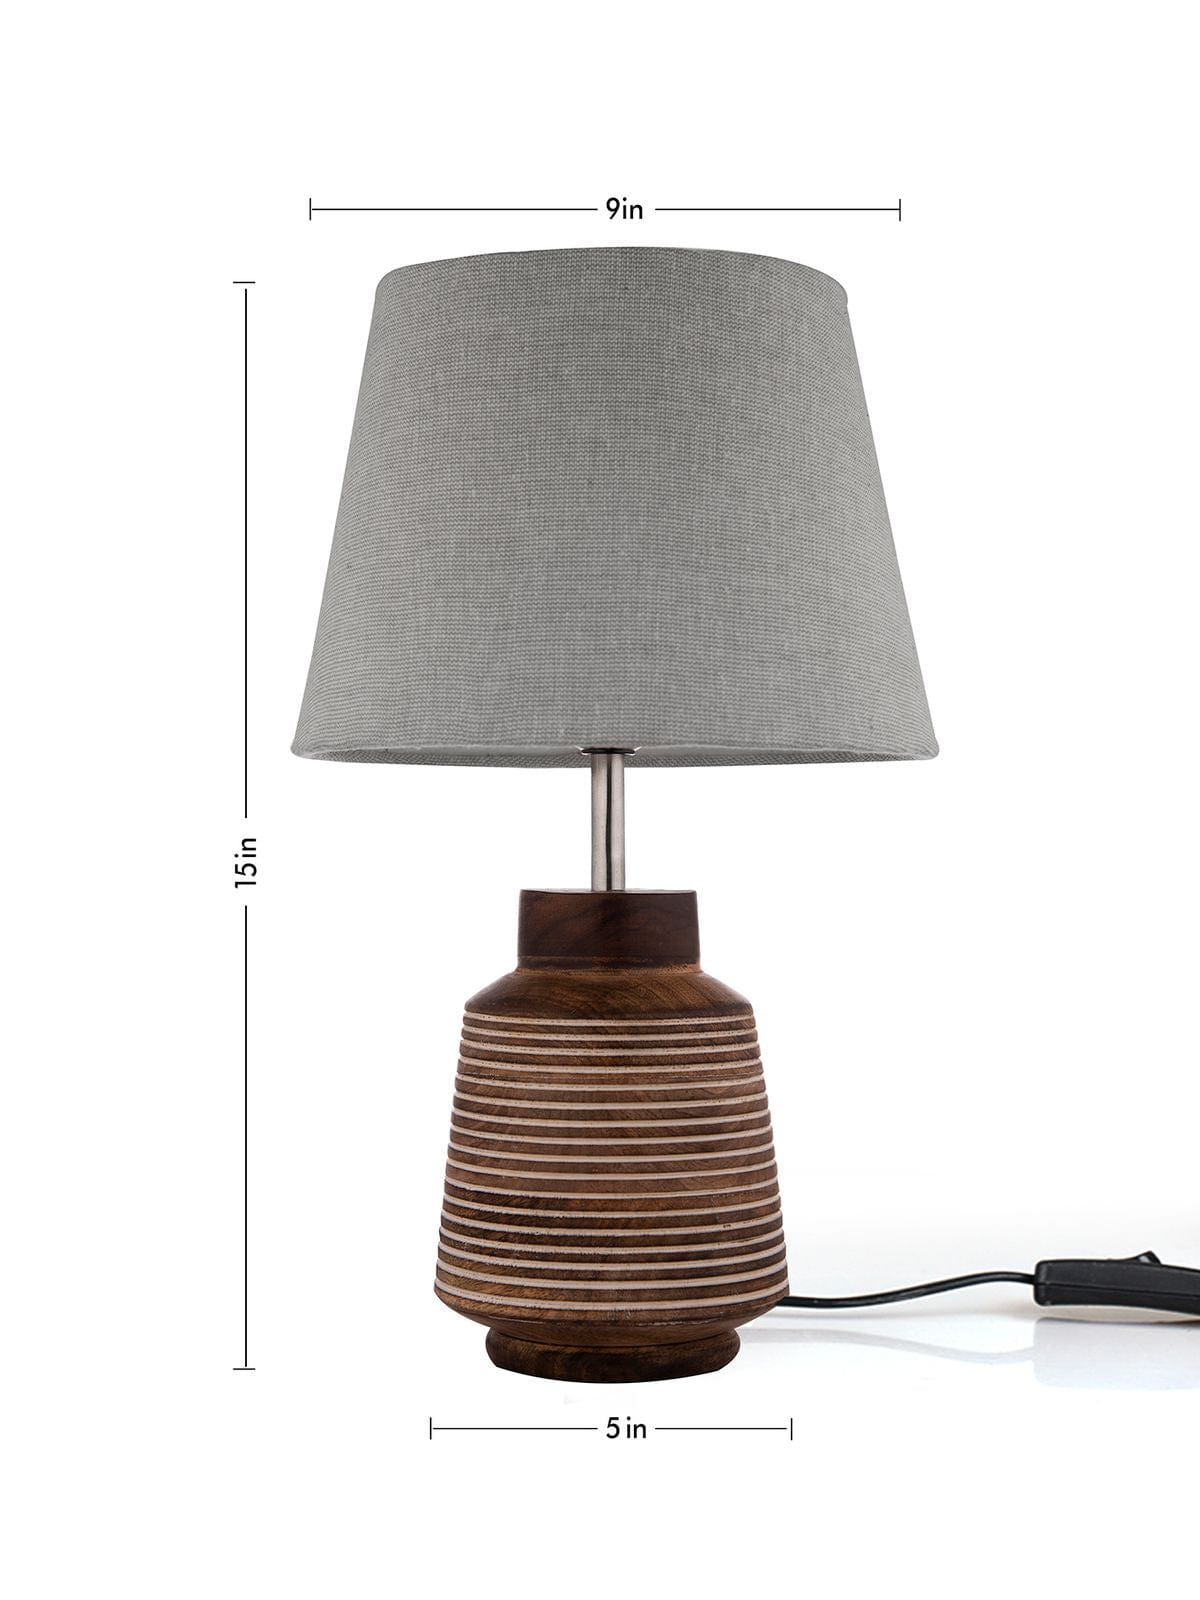 Rustic Ridged Wooden Lamp with Samre Grey Shade